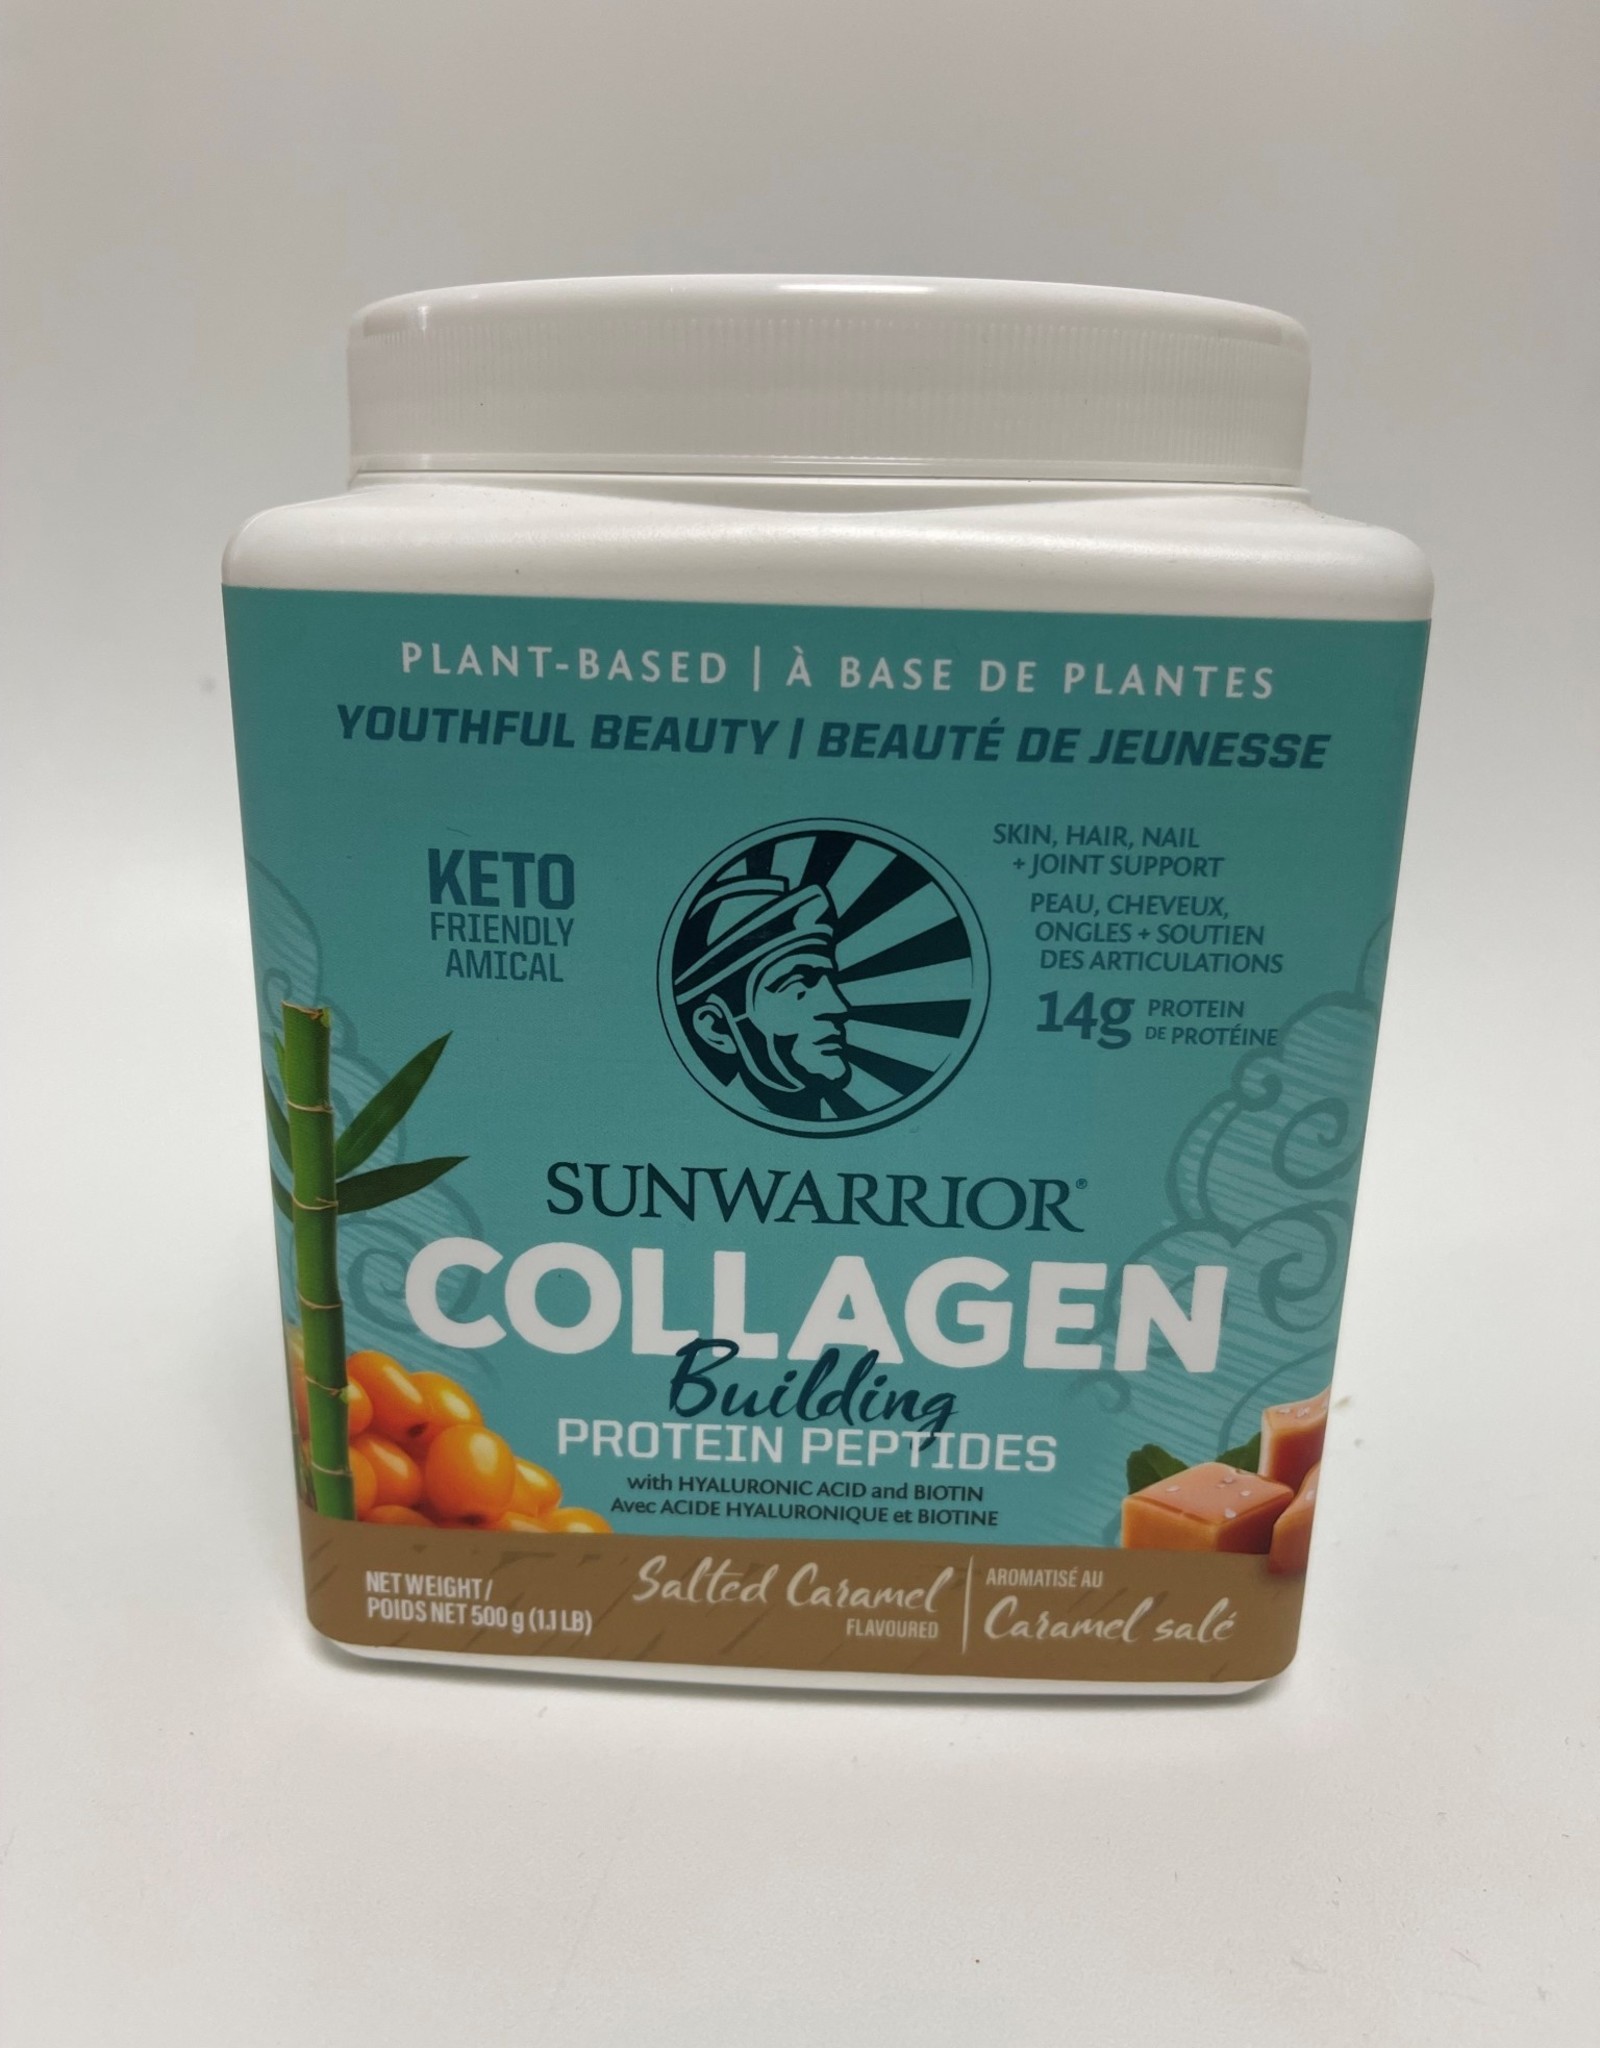 SunWarrior Sunwarrior - Collagen Building Protein Peptides, Tahitian Salted Caramel (500g)